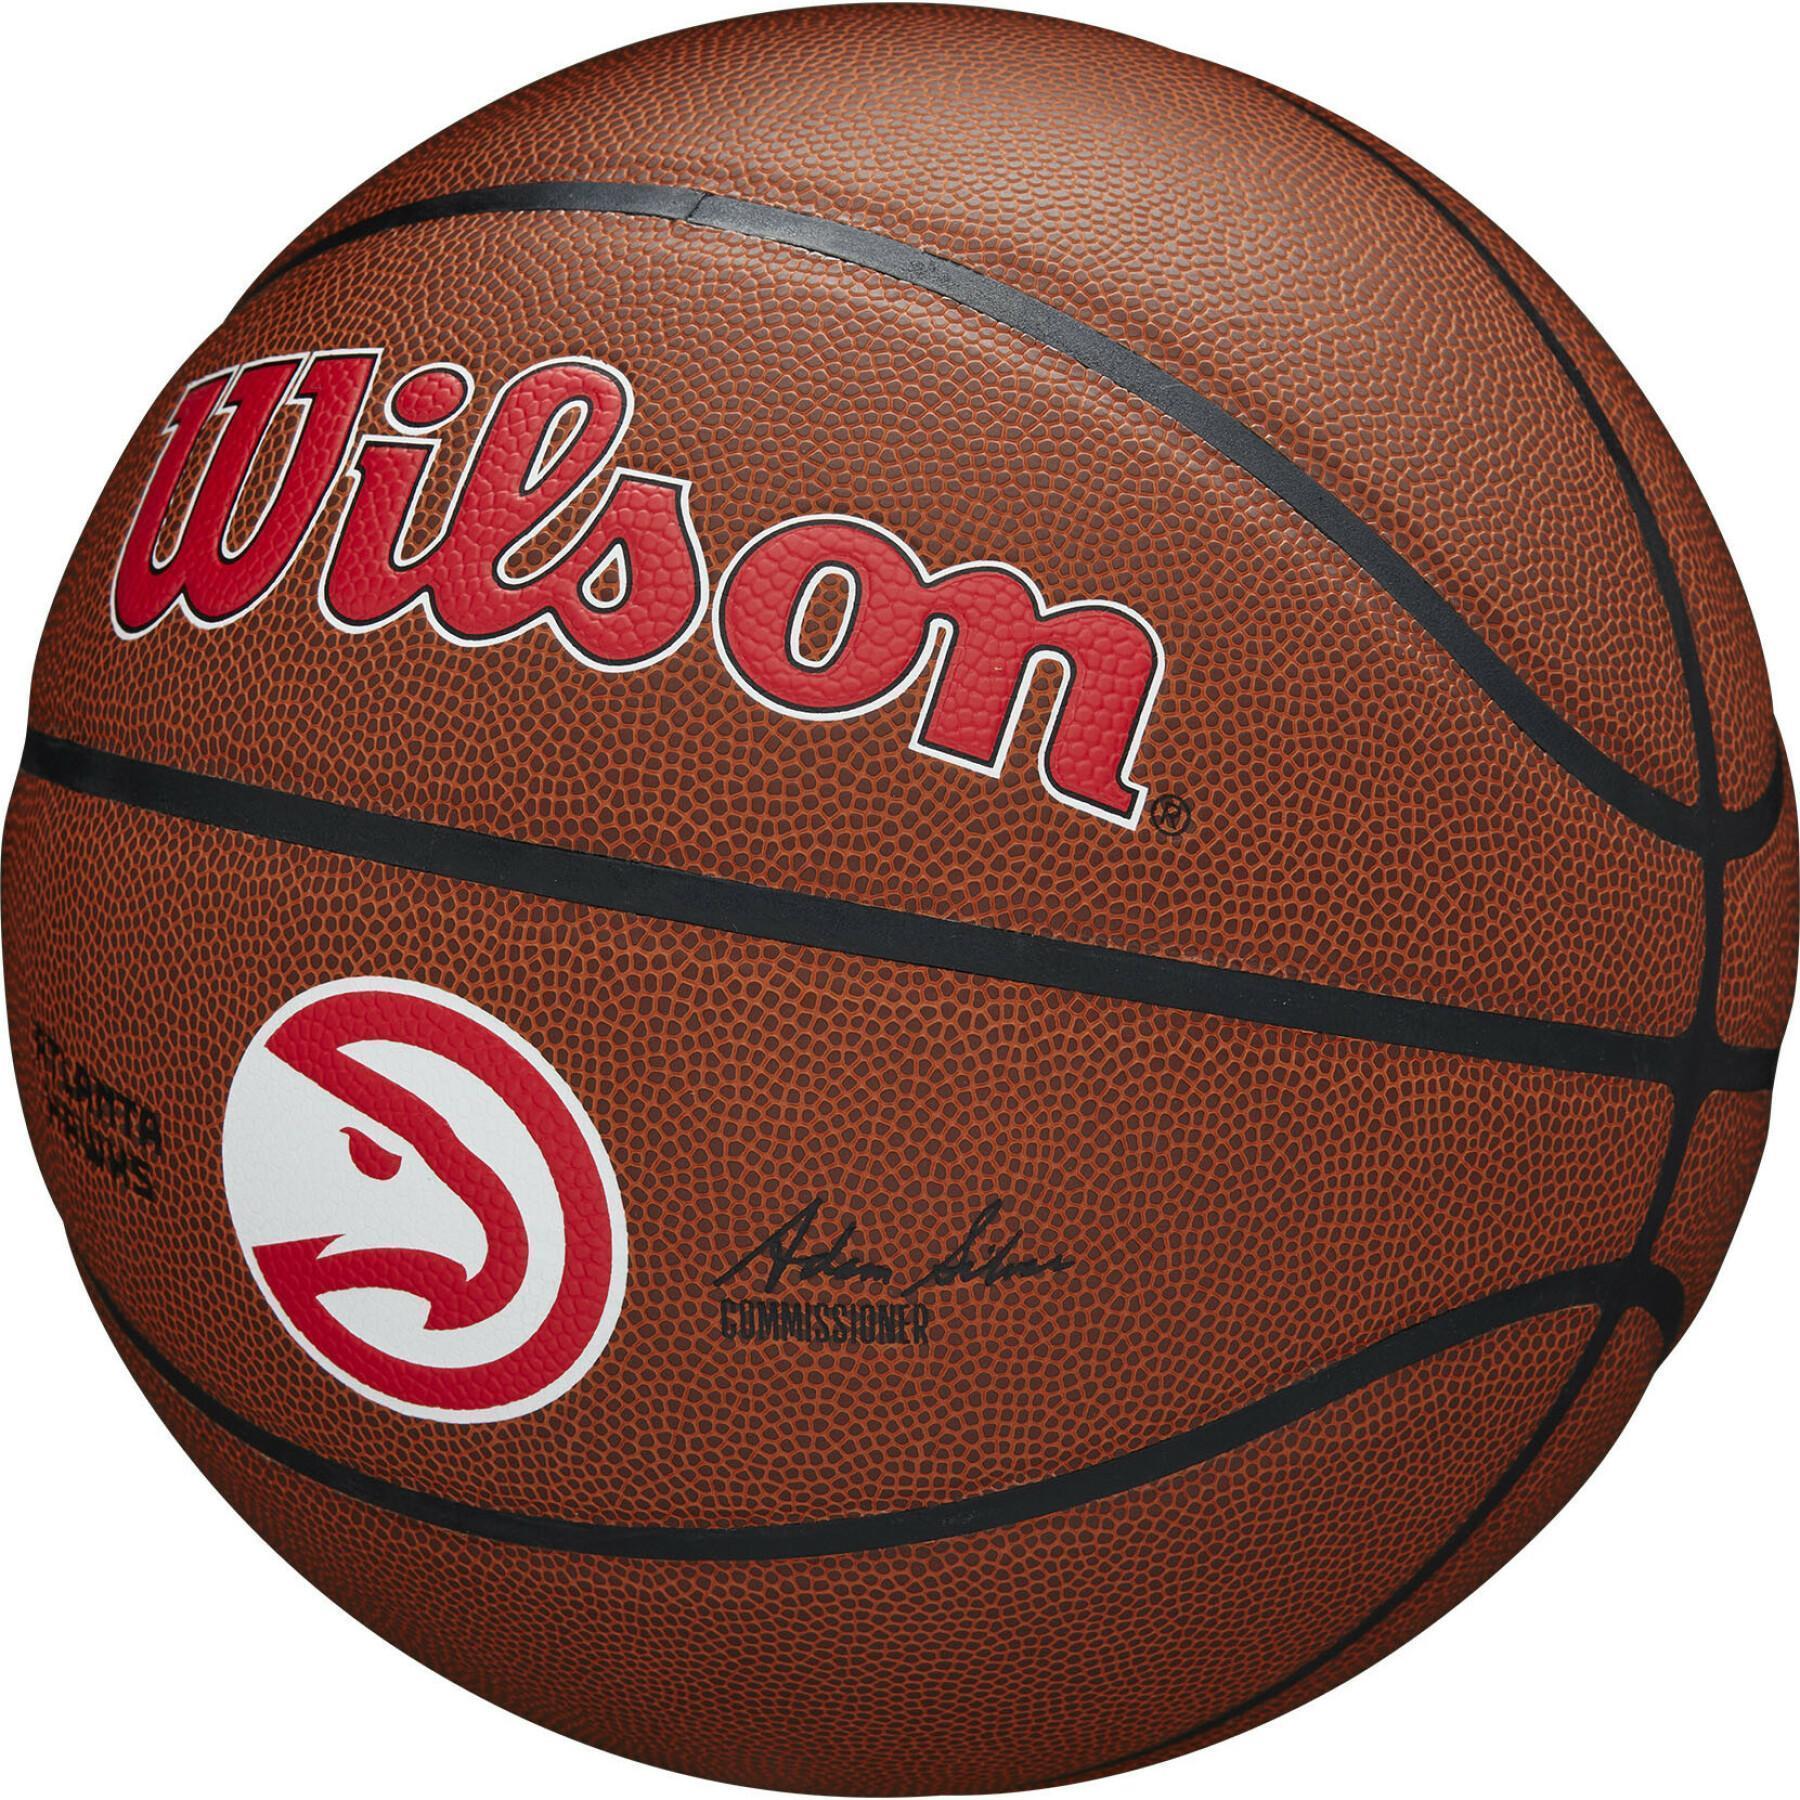 Balón Atlanta Hawks NBA Team Alliance